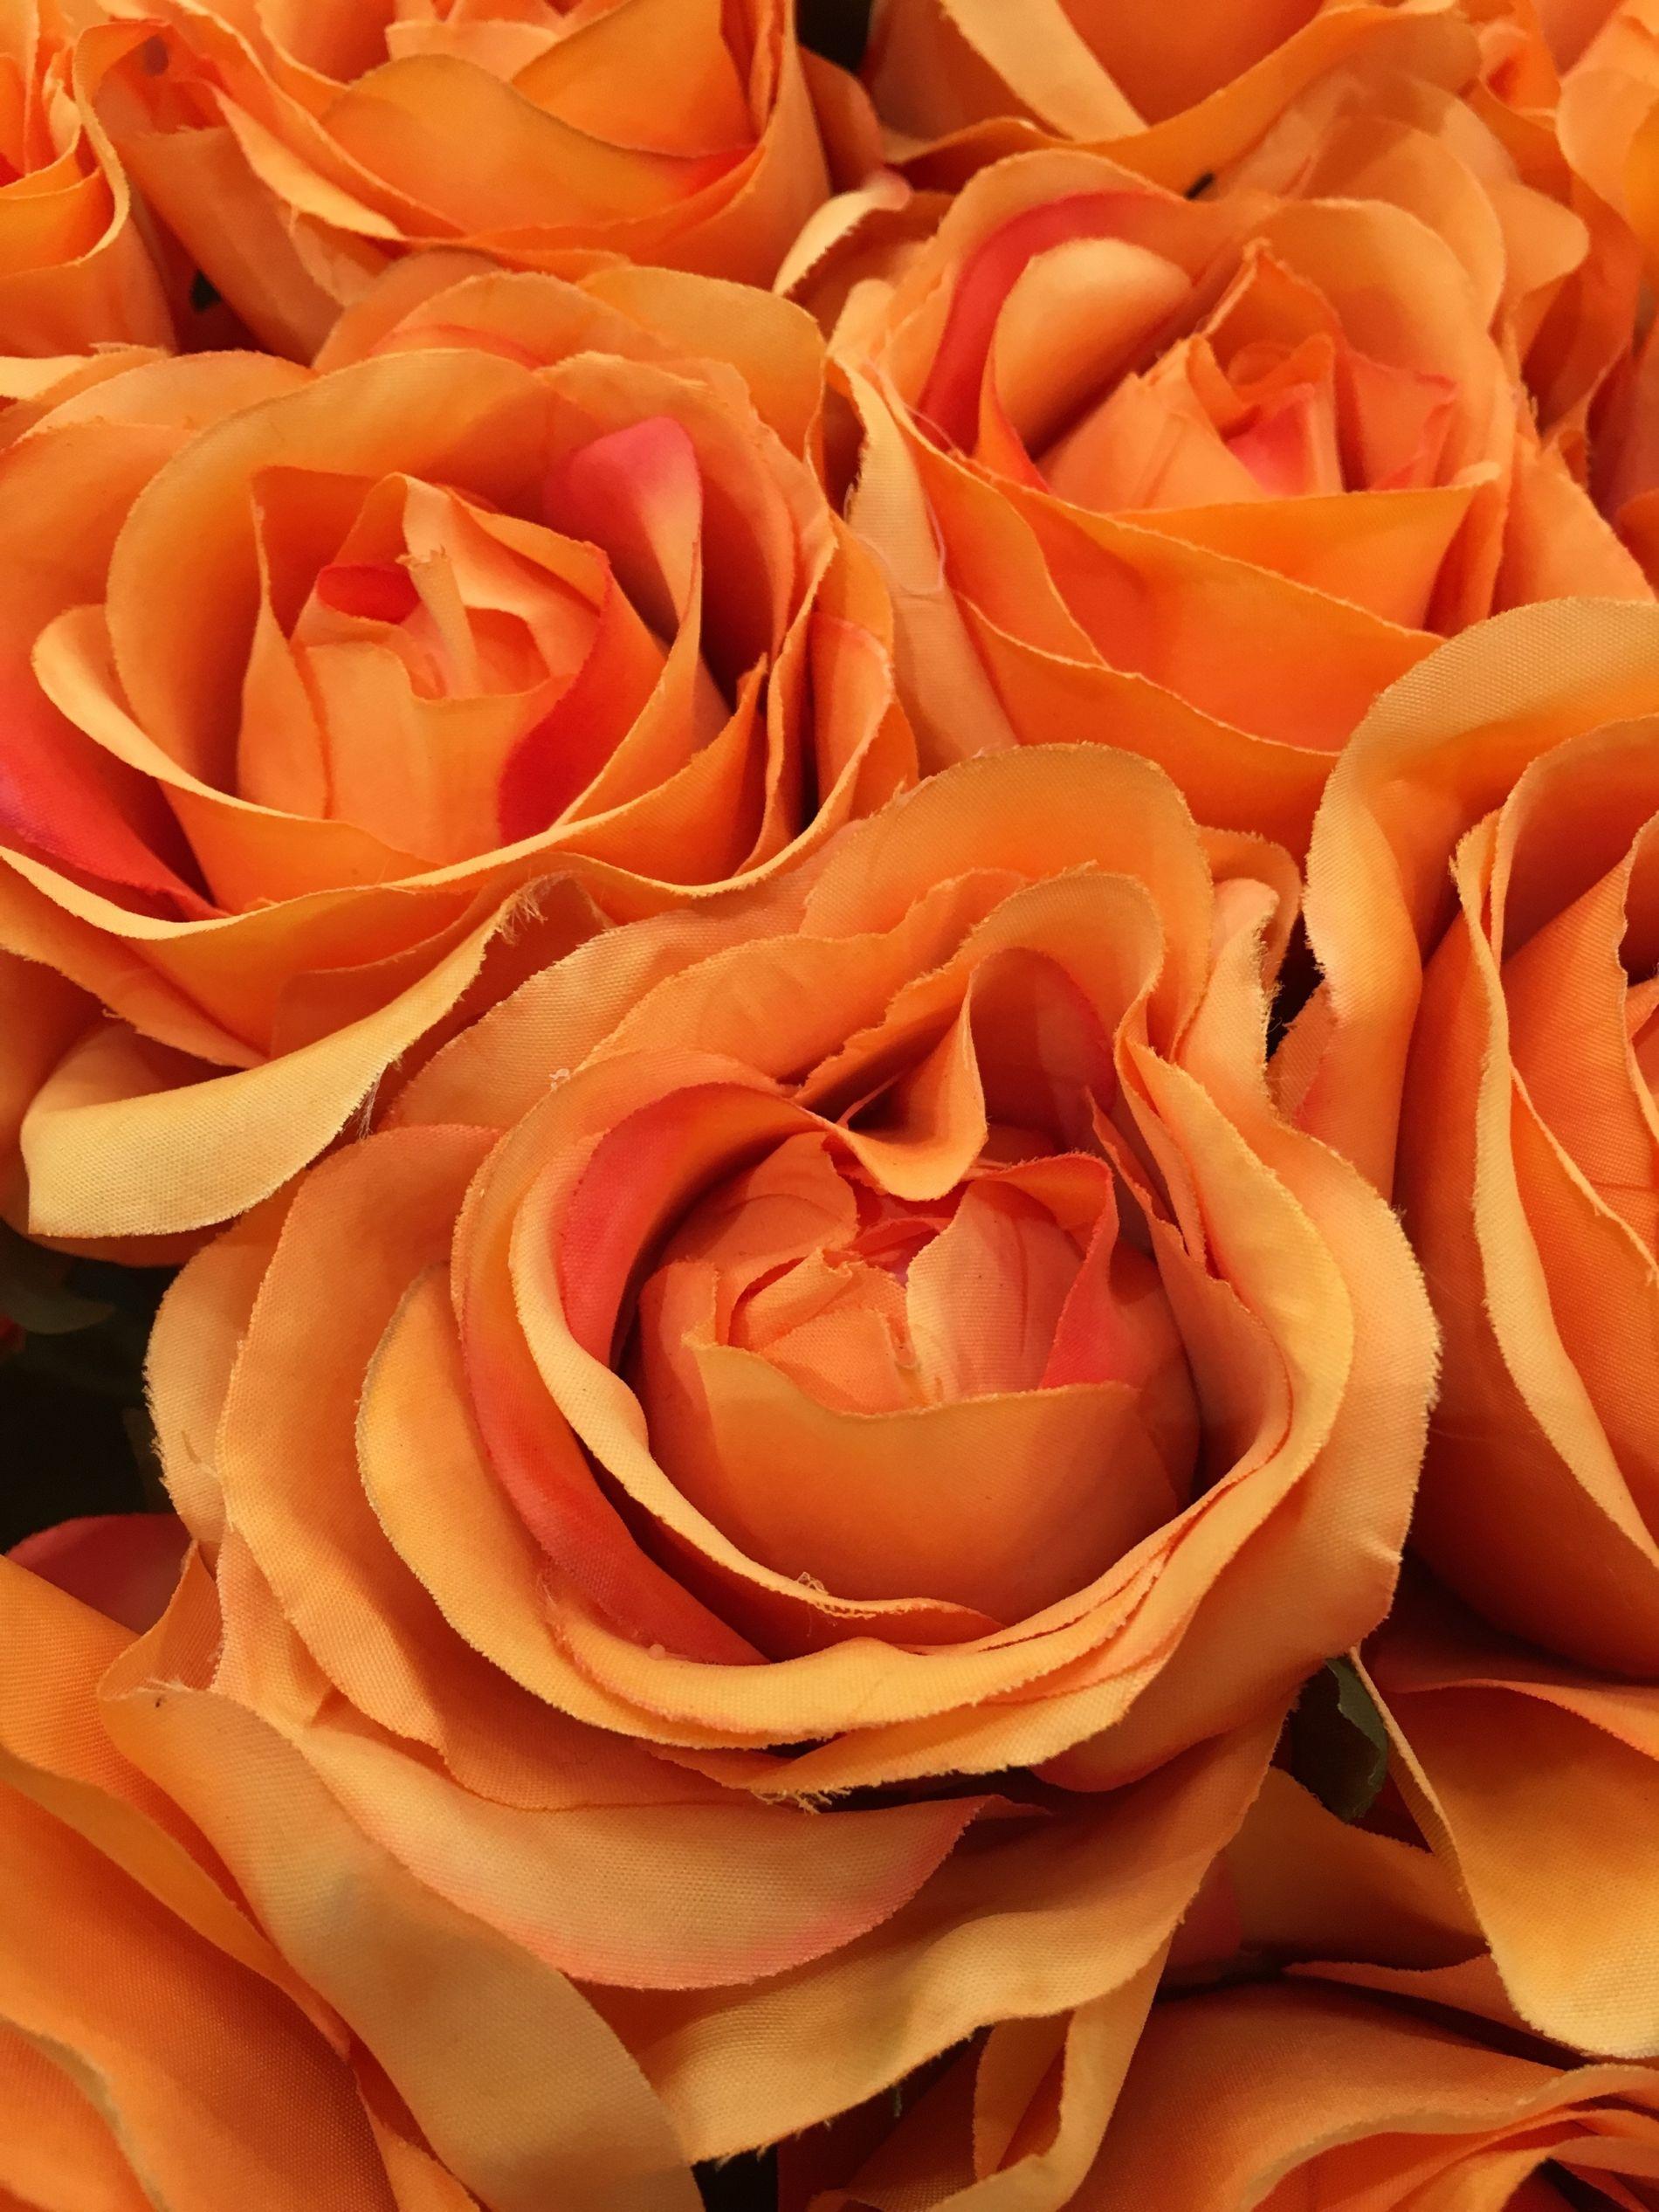 Orange Roses With Close Range Photogrammetry 52714